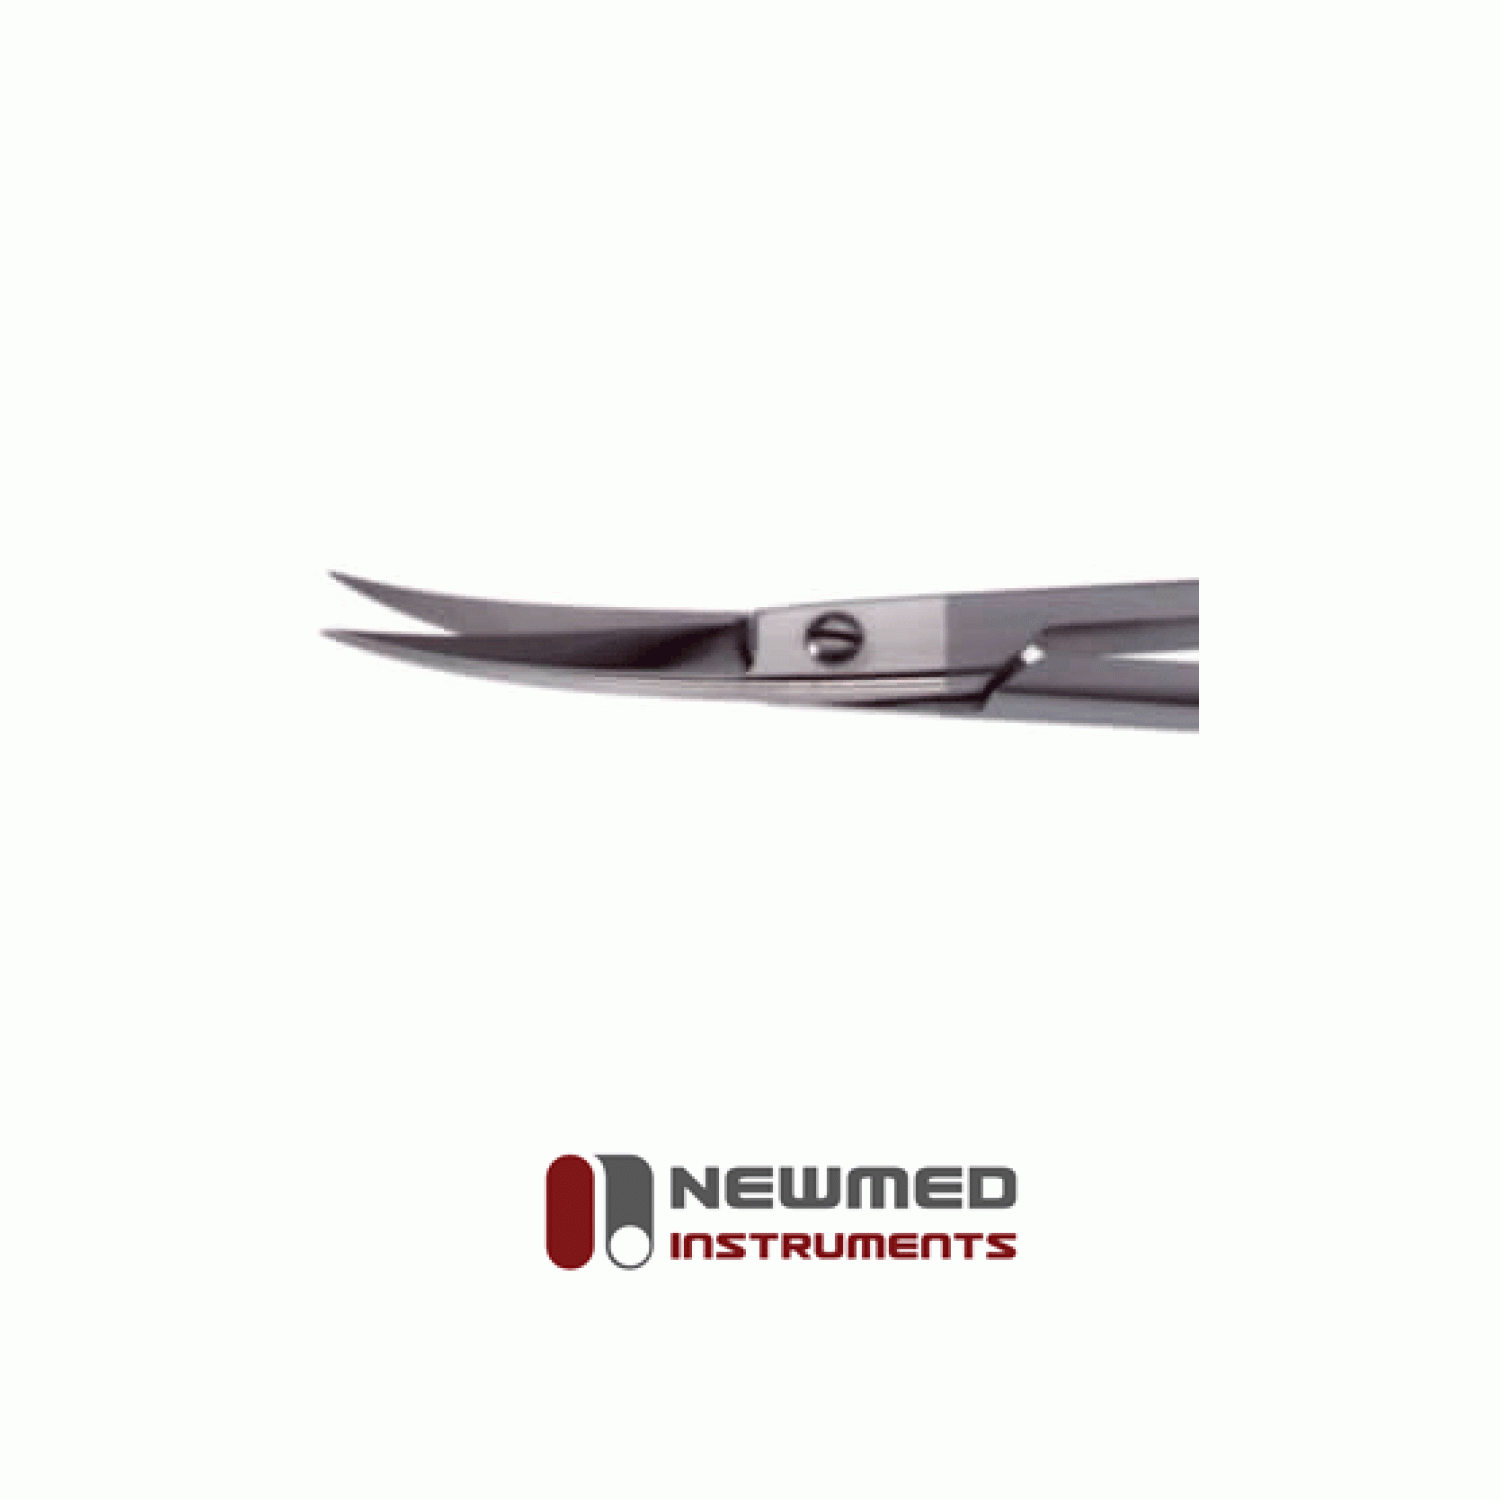 Joseph Nasal Scissors sharp tips curved - BOSS Surgical Instruments